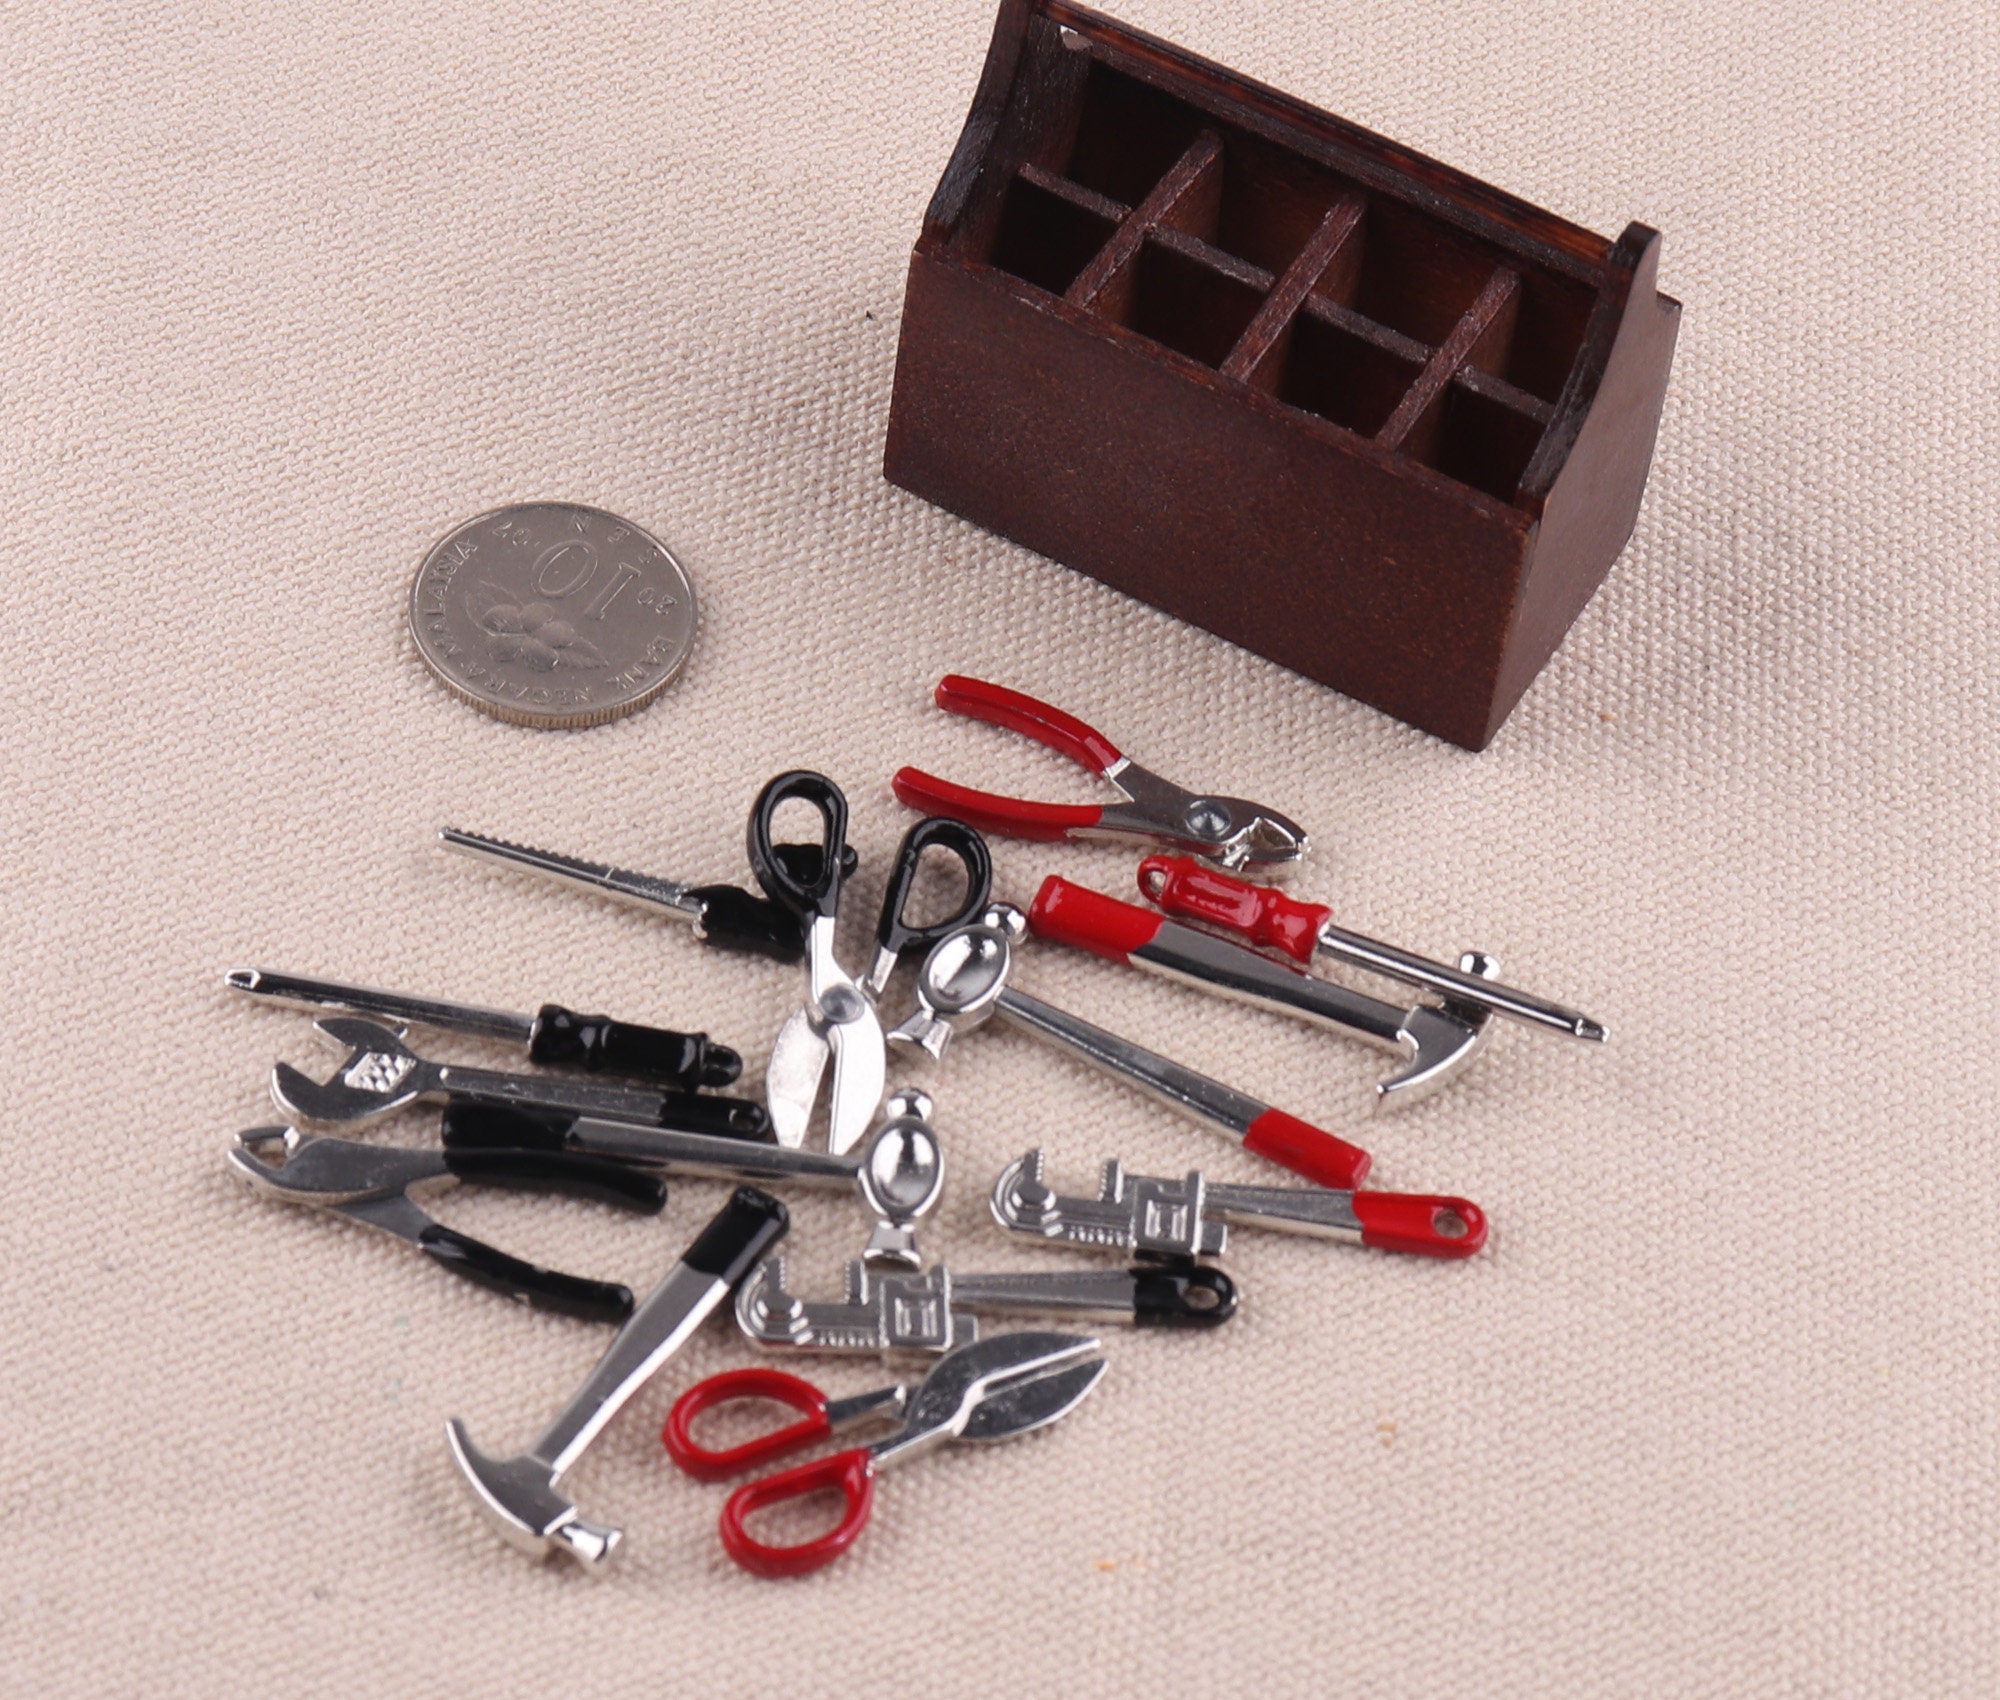 DIY Miniature Tool Set, DollHouse